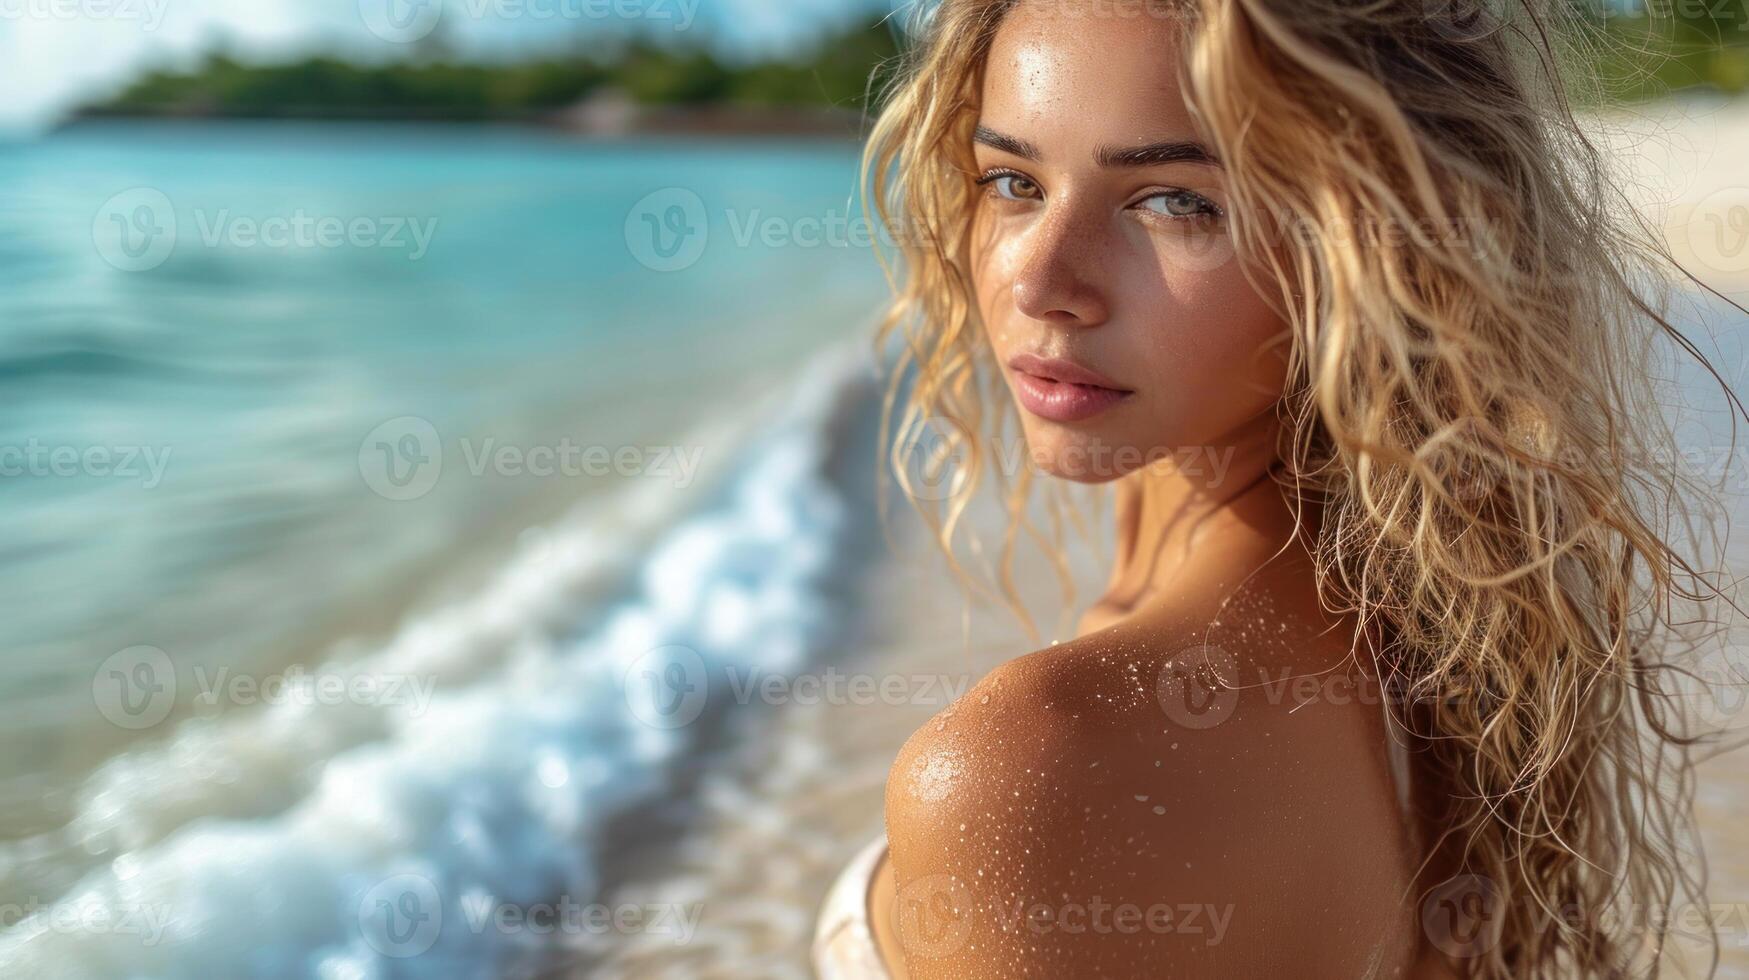 AI generated Beautiful girl in white bikini on the beach. Close-up portrait photo